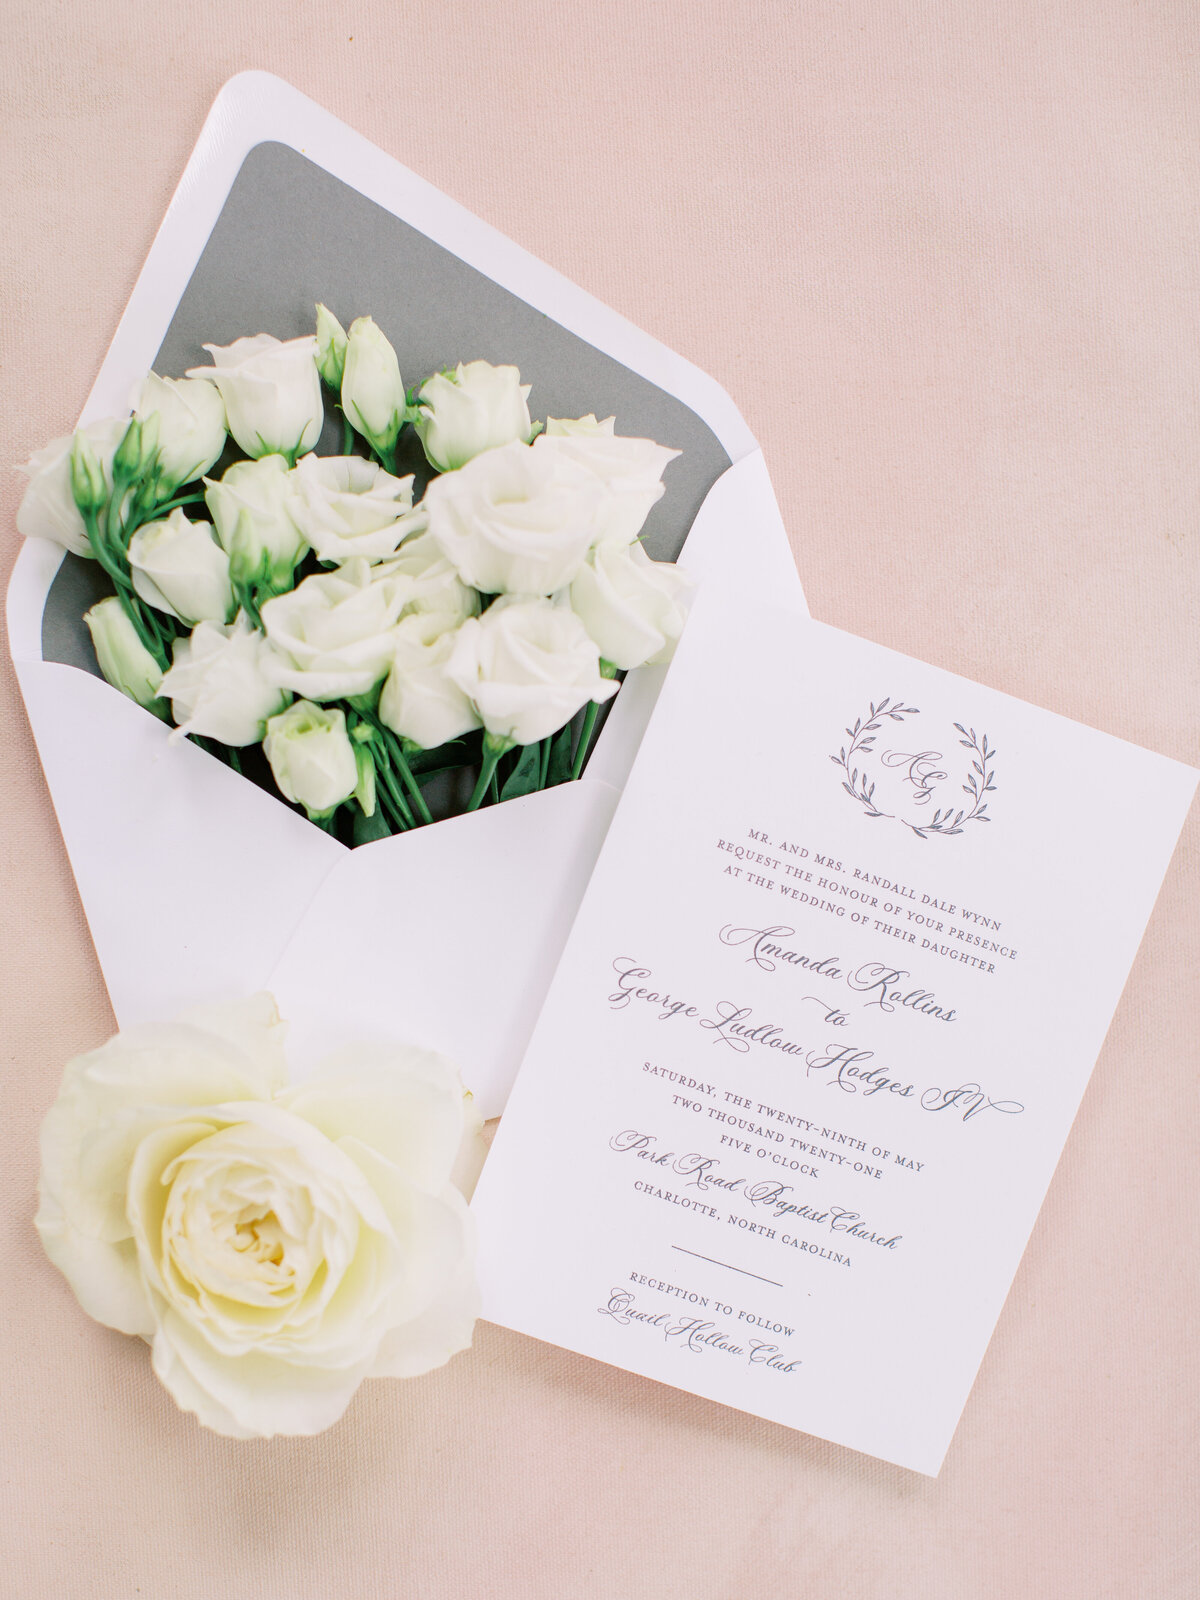 Quail Hollow Club wedding invitation flat lay with fresh flowers